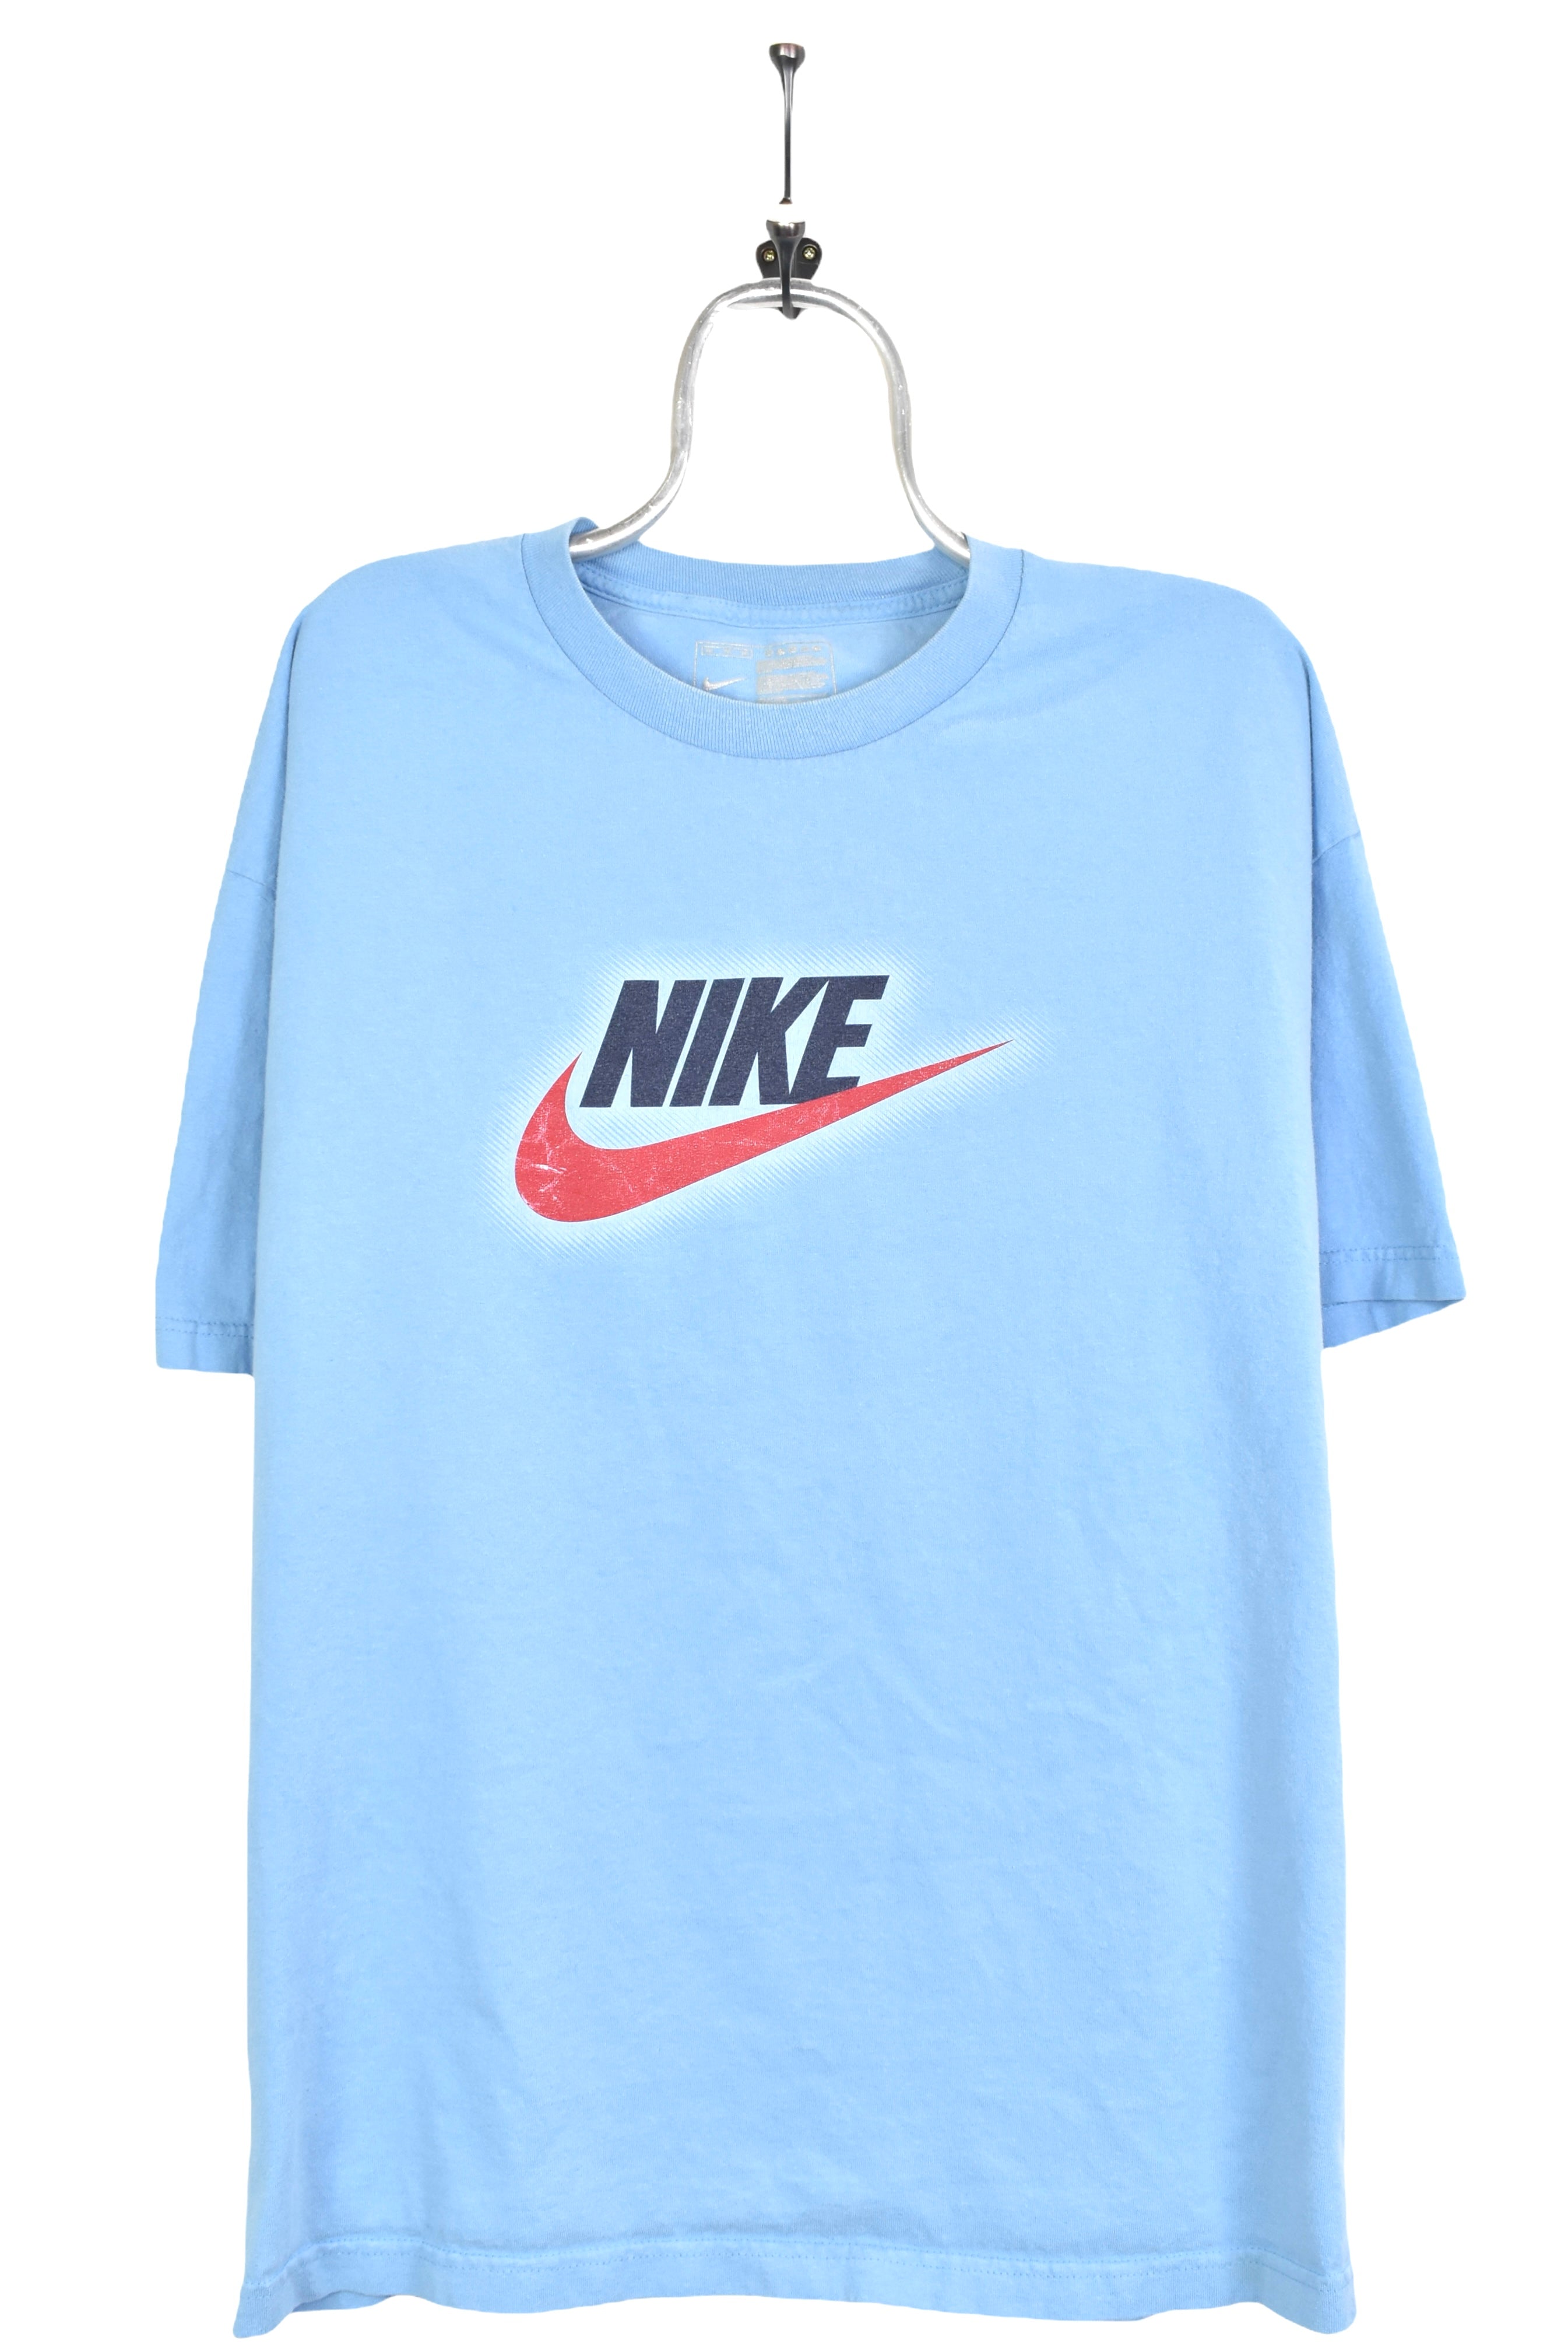 Vintage Nike shirt, big logo swoosh graphic tee - XL. light blue NIKE